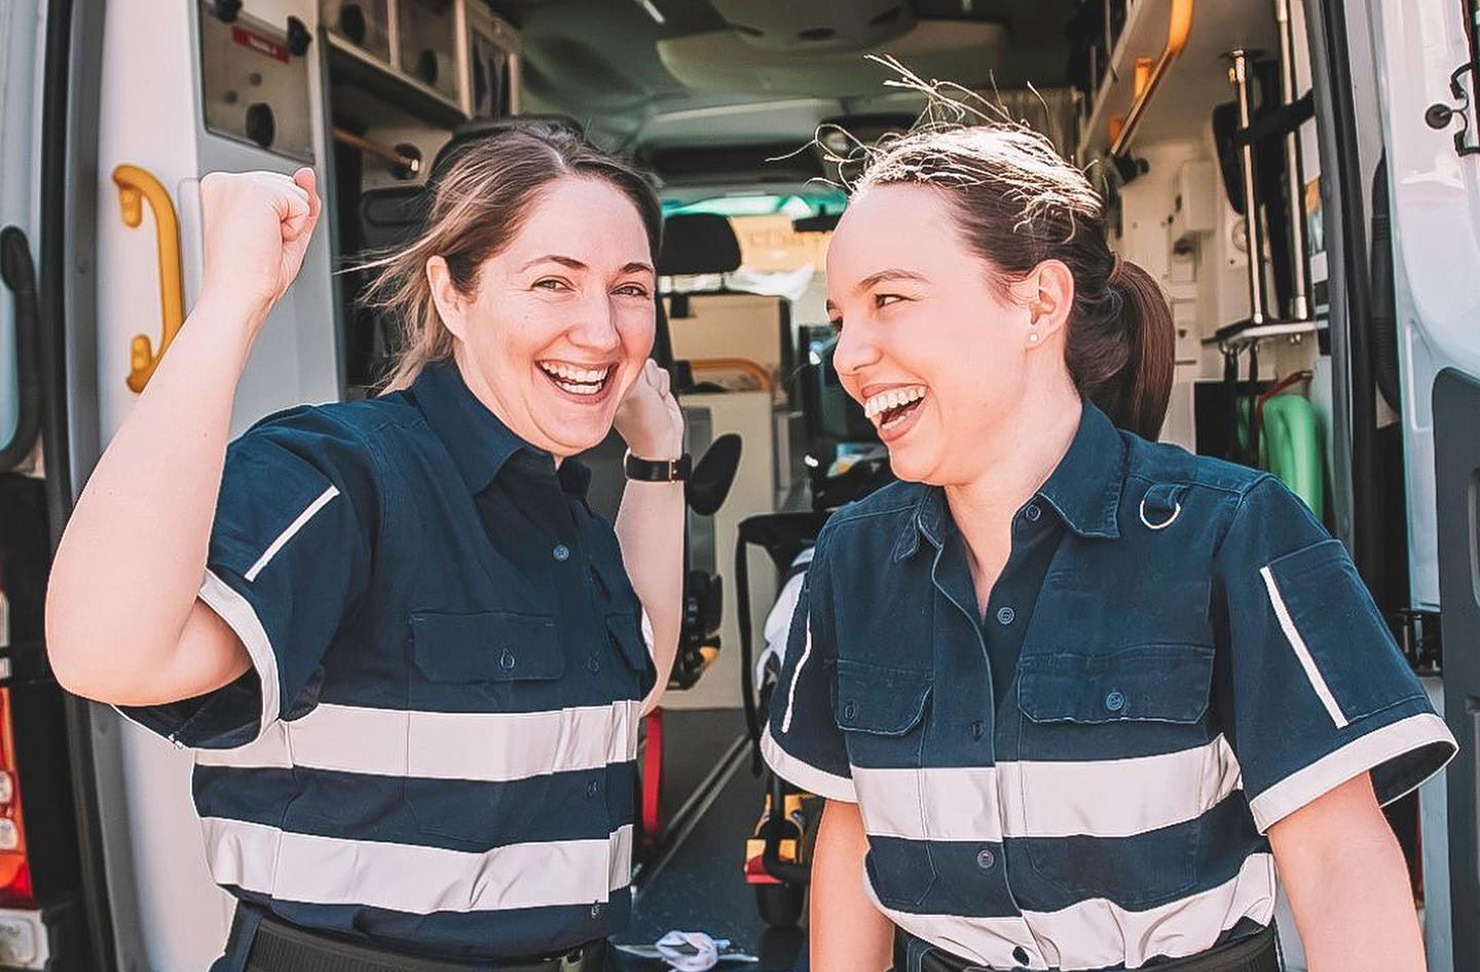 Two paramedics together 